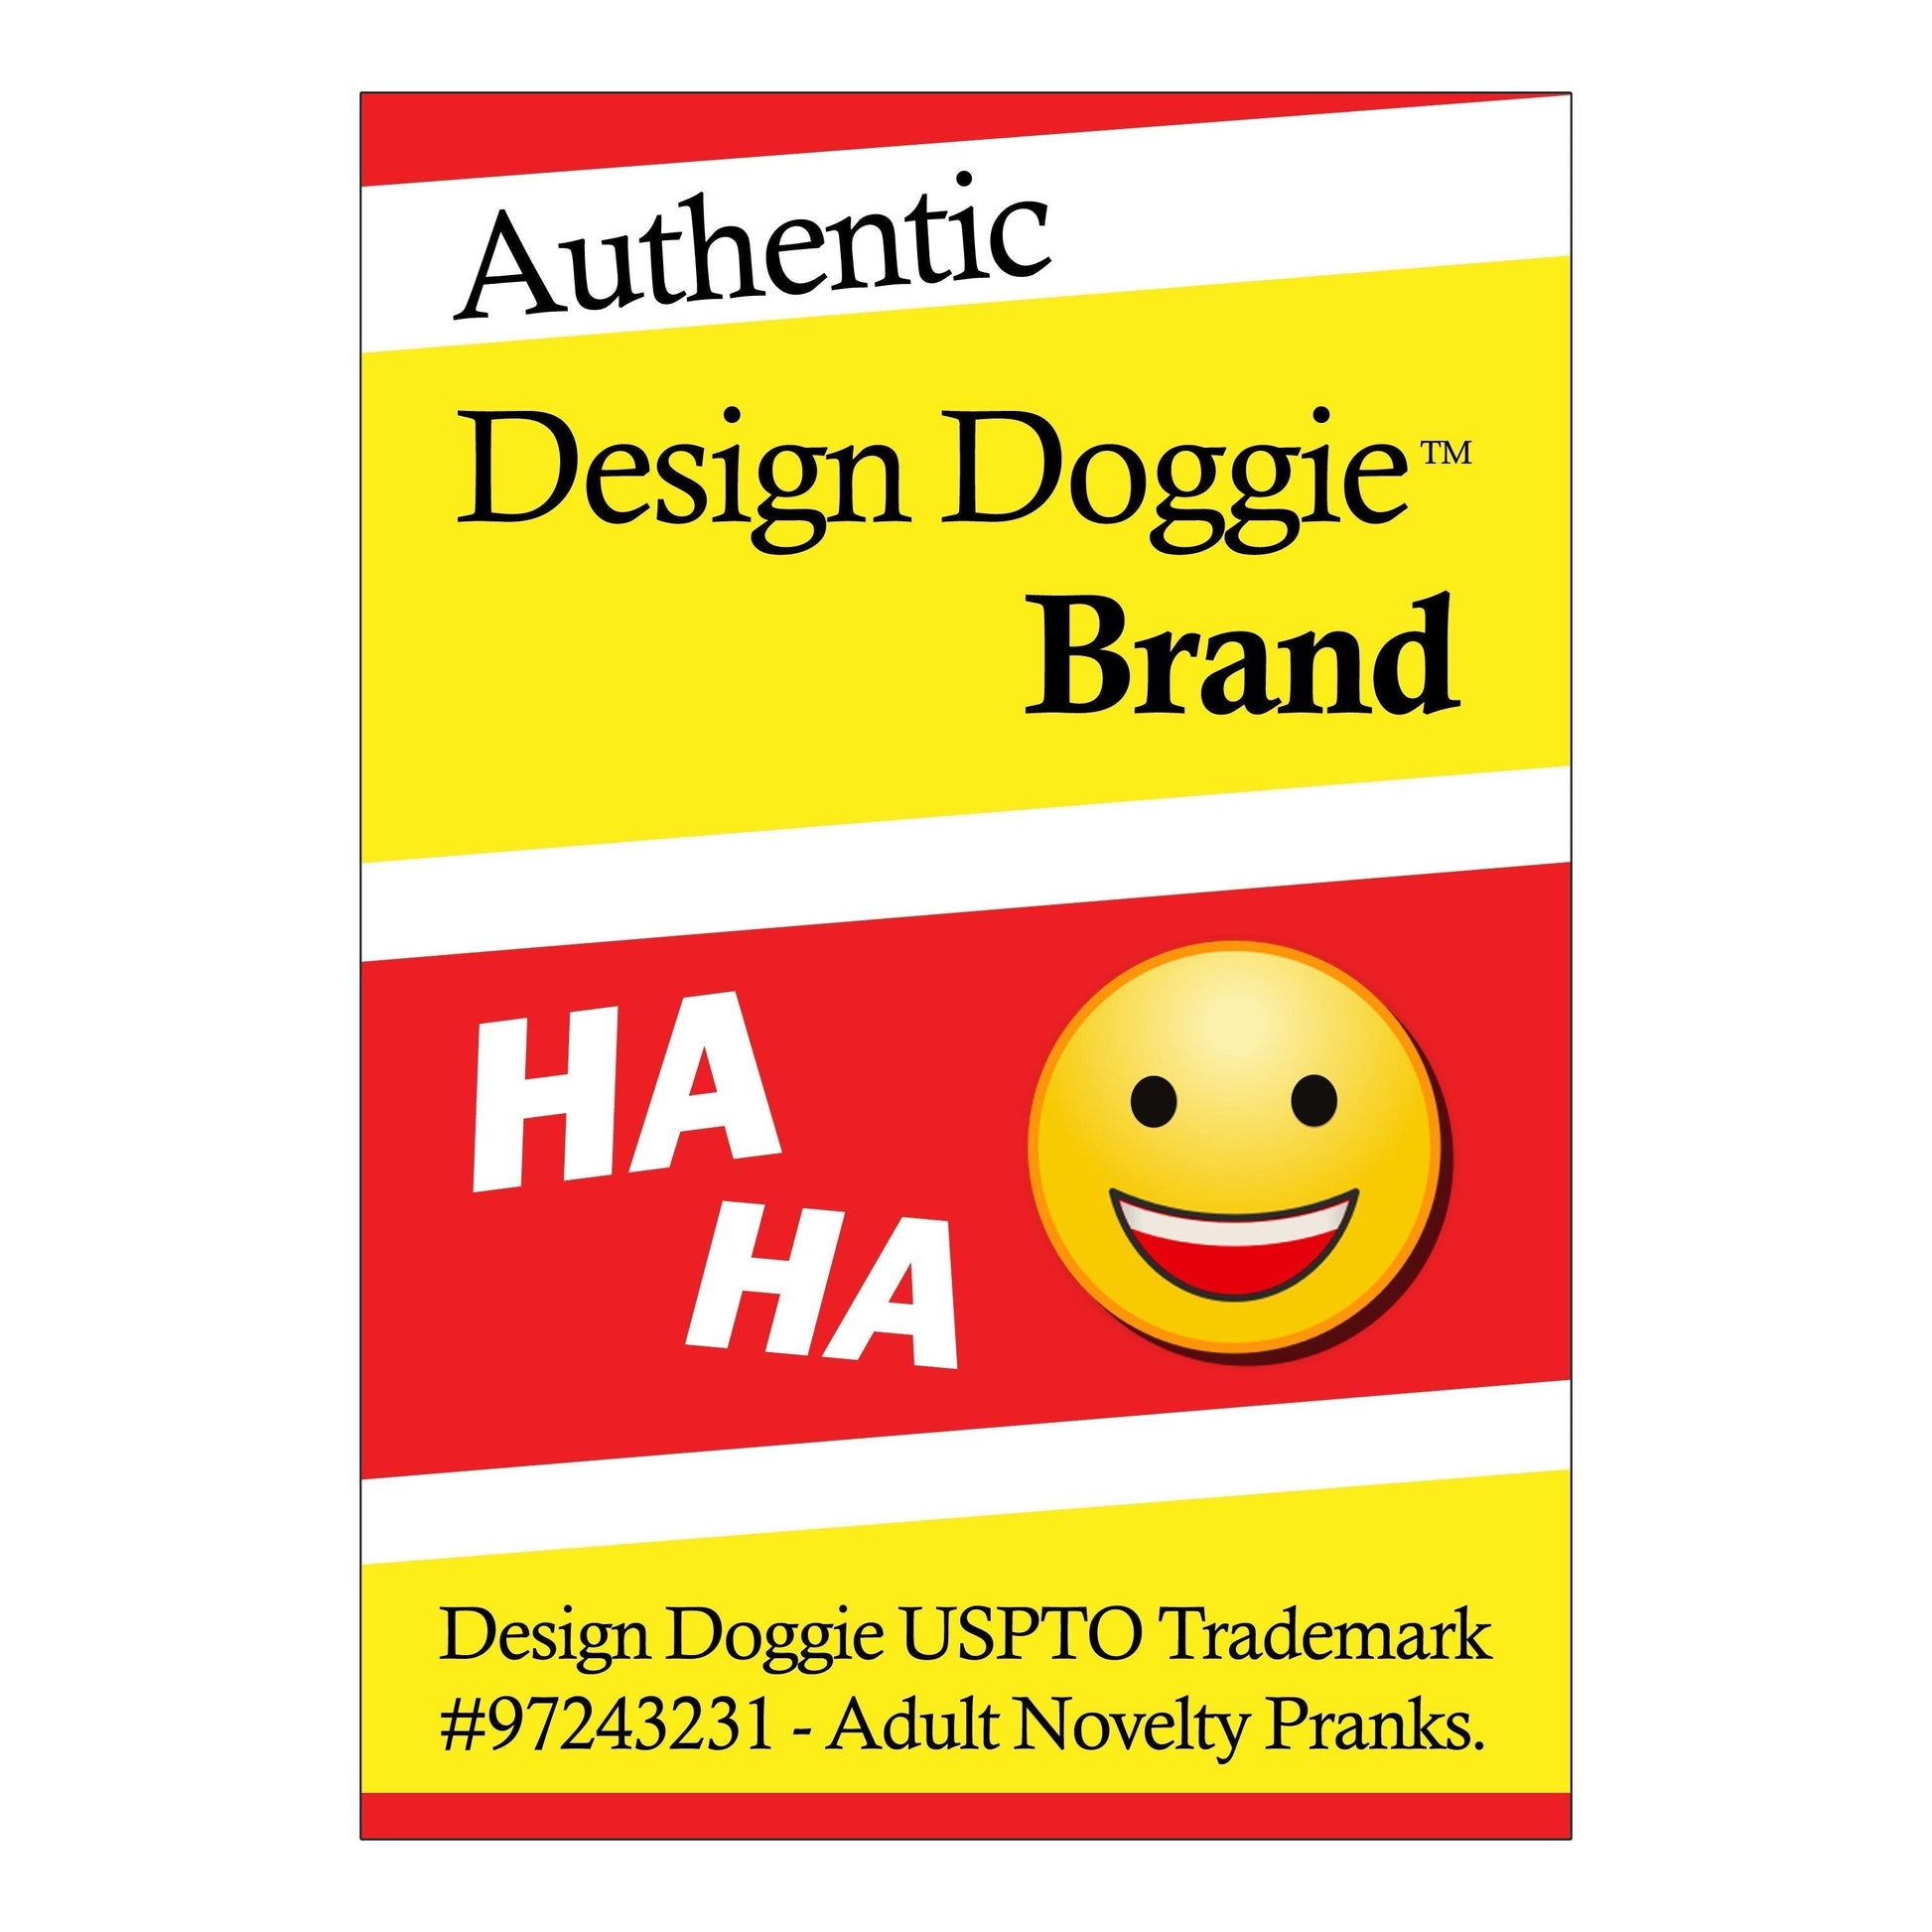 Date an Inmate Design Doggie Brand